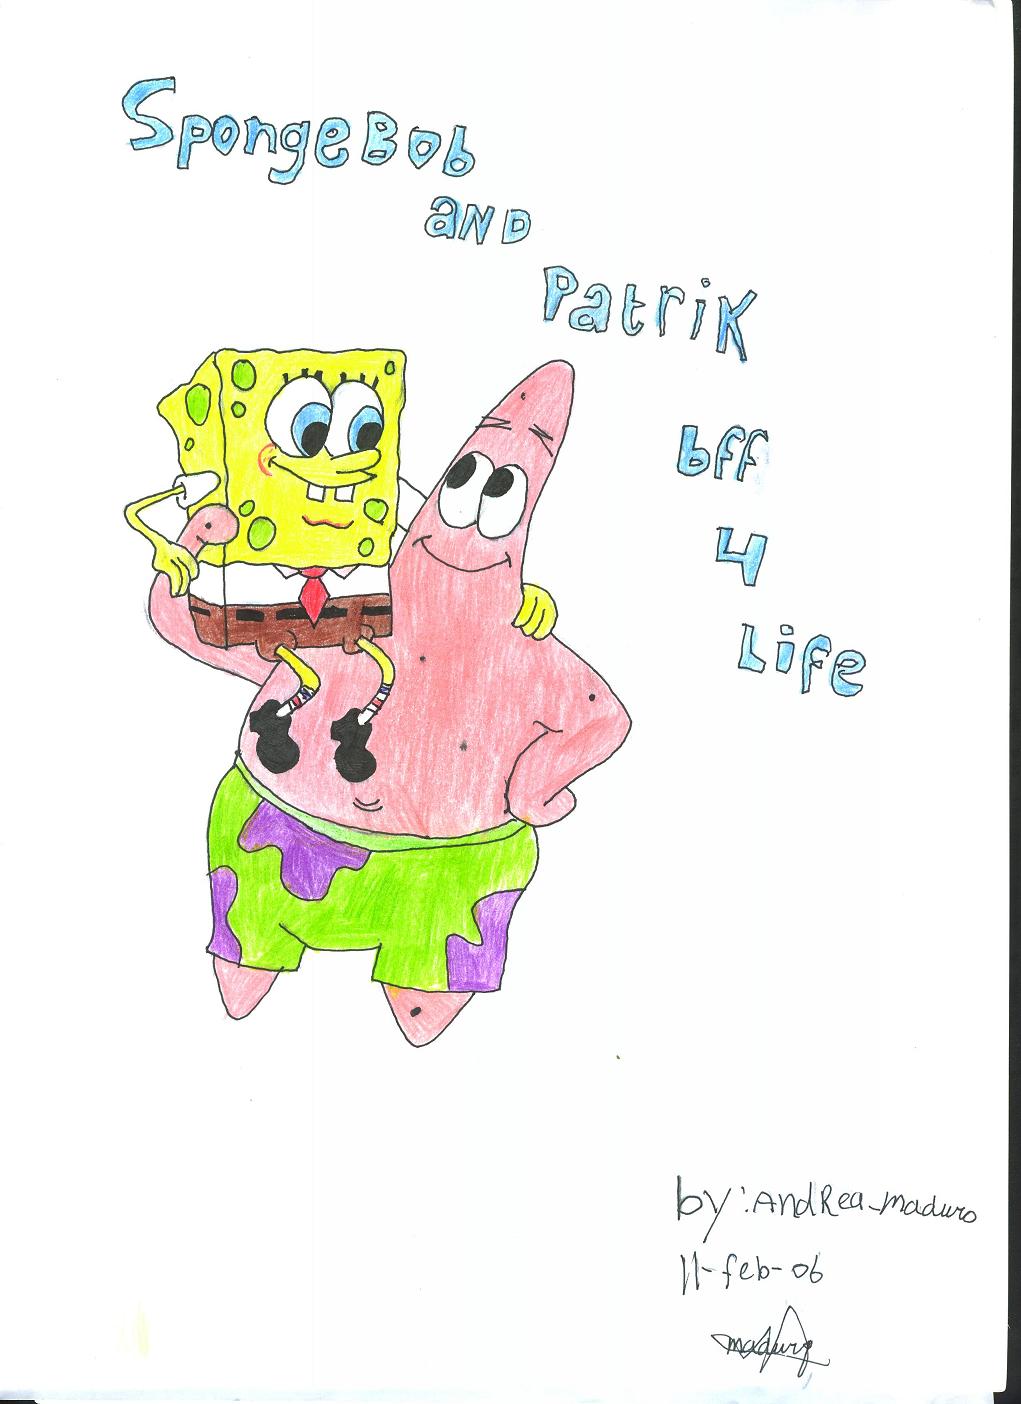 SpongeBob &Patrick bff 4 life! by andrea_maduro